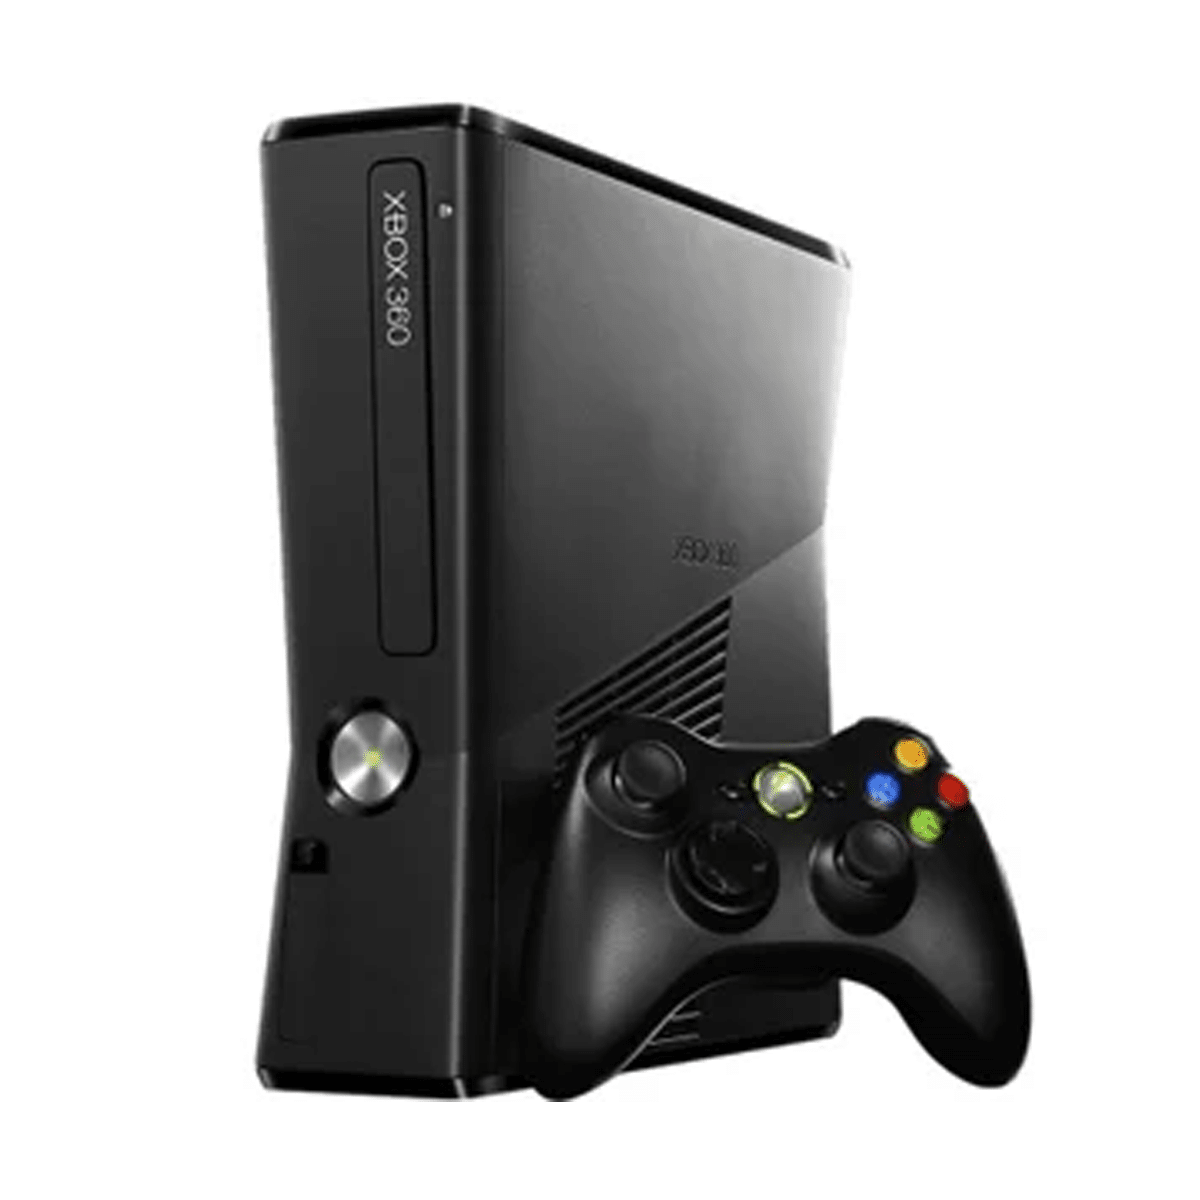 Historiker tekst fotoelektrisk Xbox 360 Slim konsol på 250GB incl. 1 org. controller - Retro Spilbutik